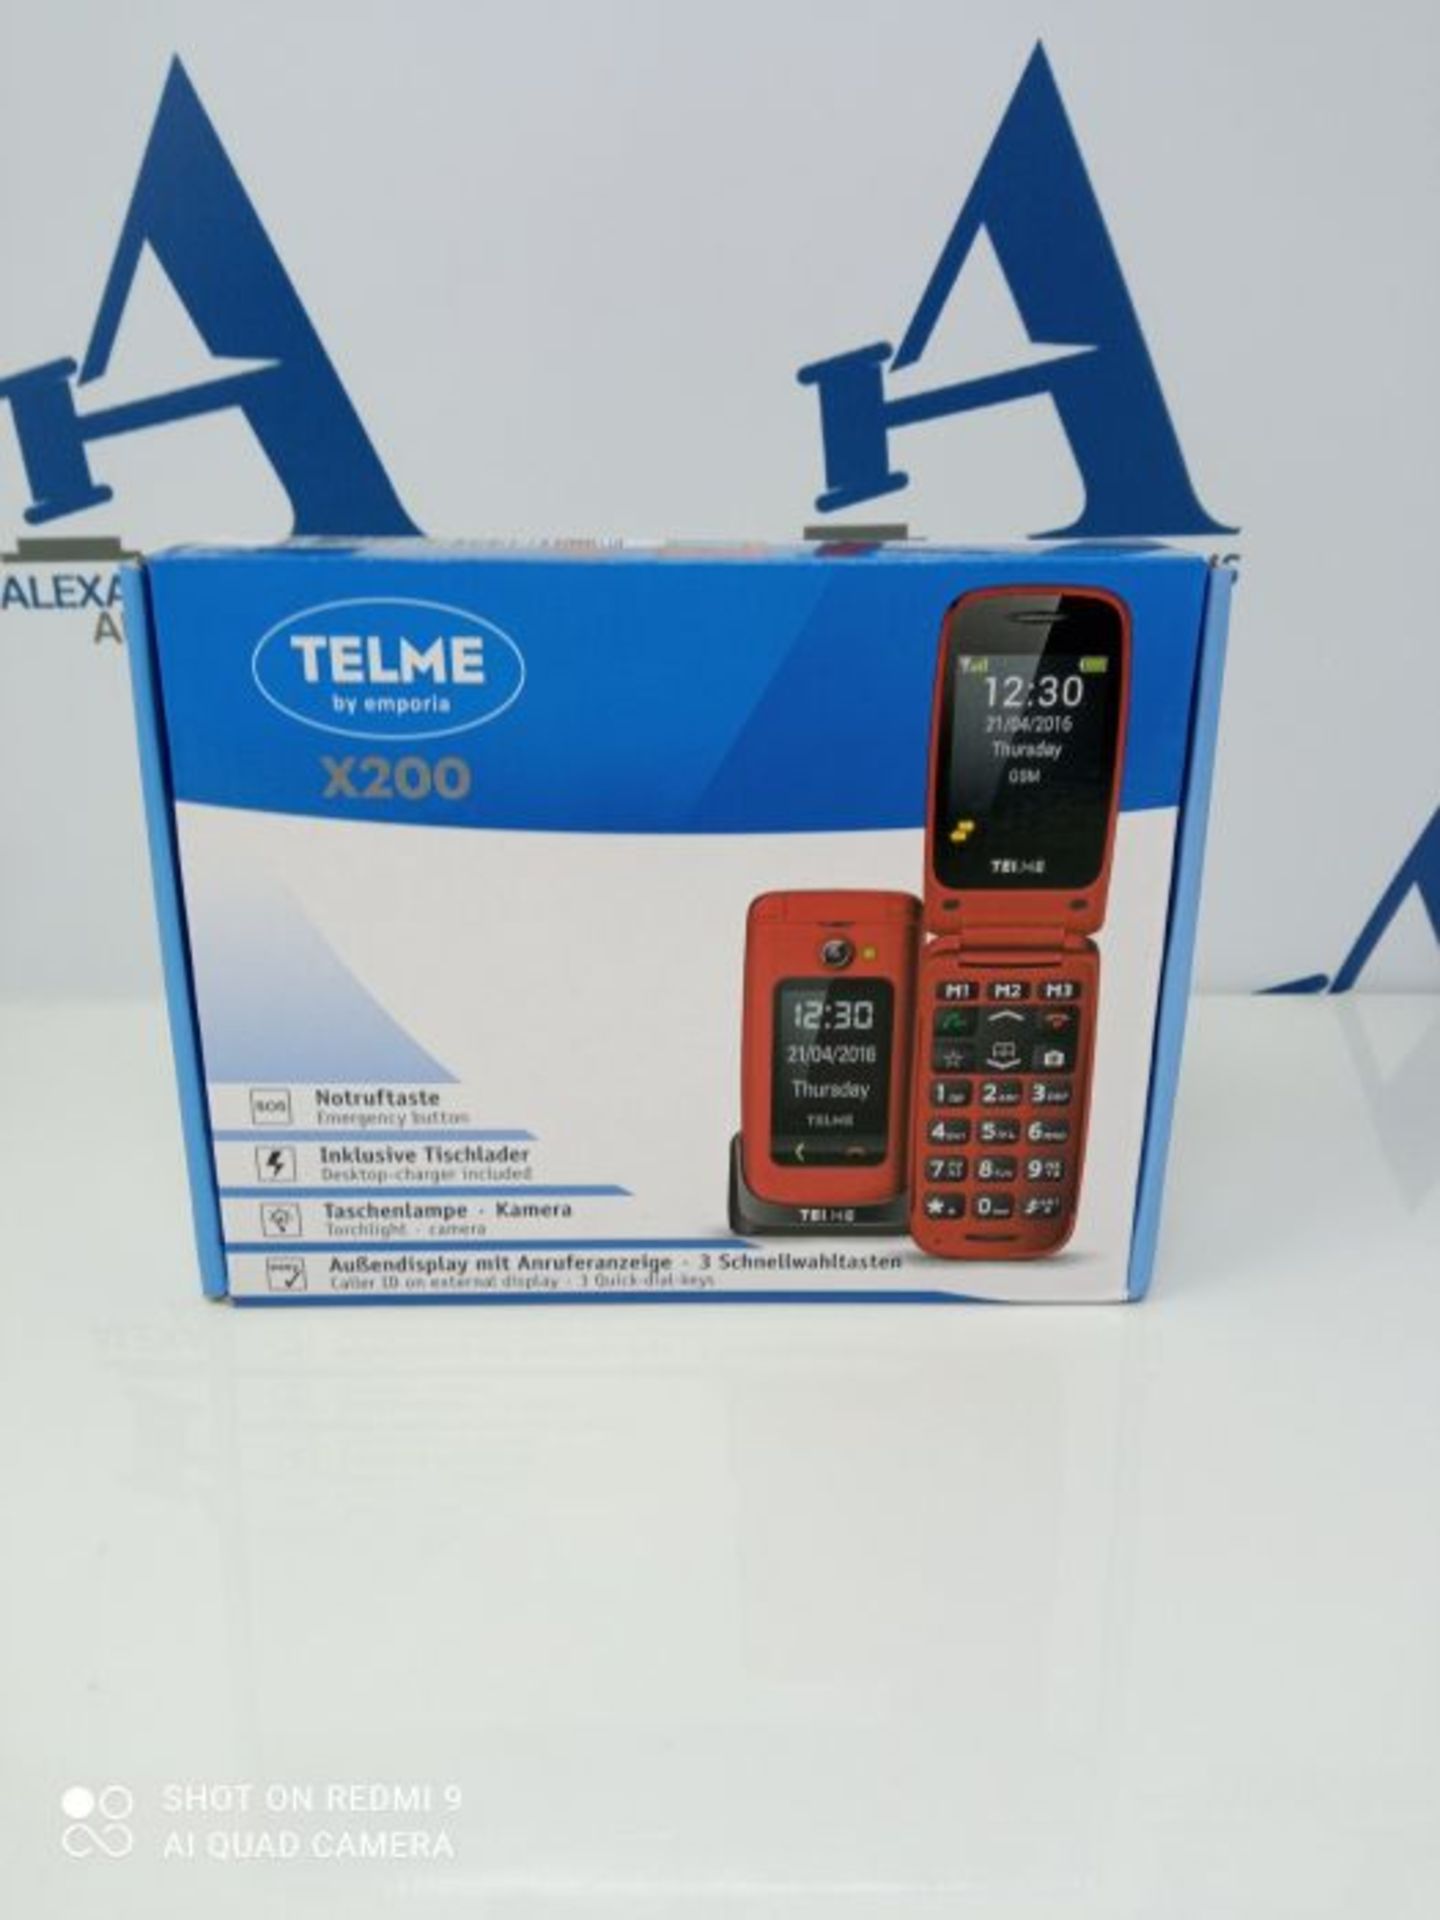 Emporia TELME X200 6.1 cm (2.4") 90 g Red Entry-level phone - TELME X200, Clamshell, S - Image 2 of 3